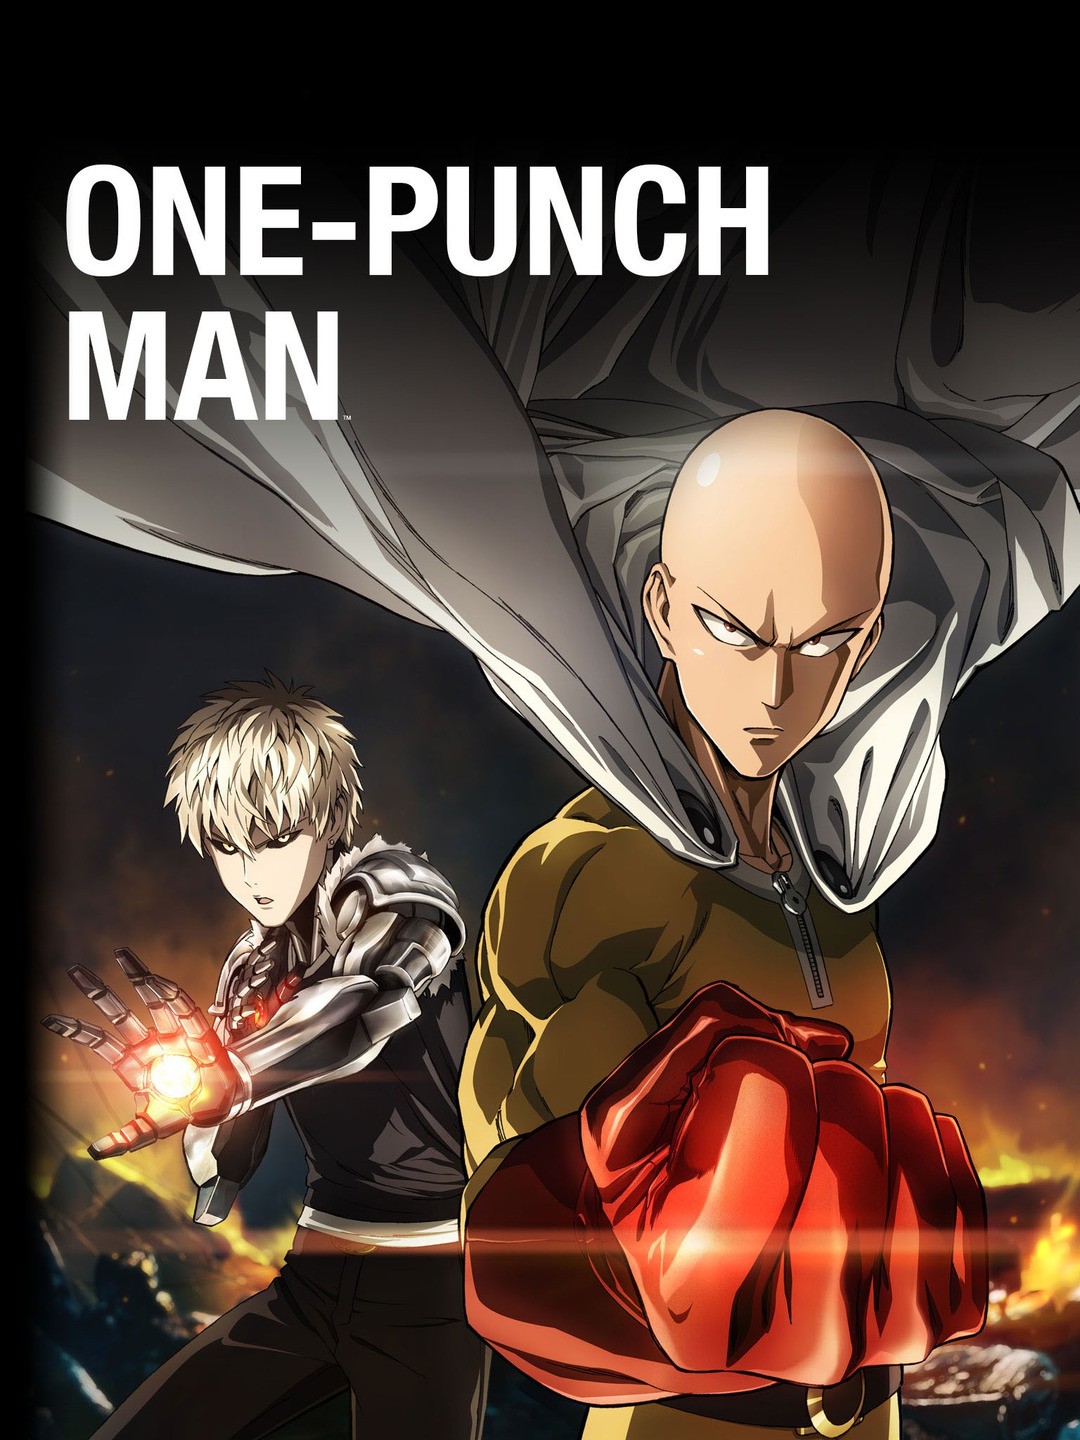 One-Punch Man Season 3 Announced - IGN